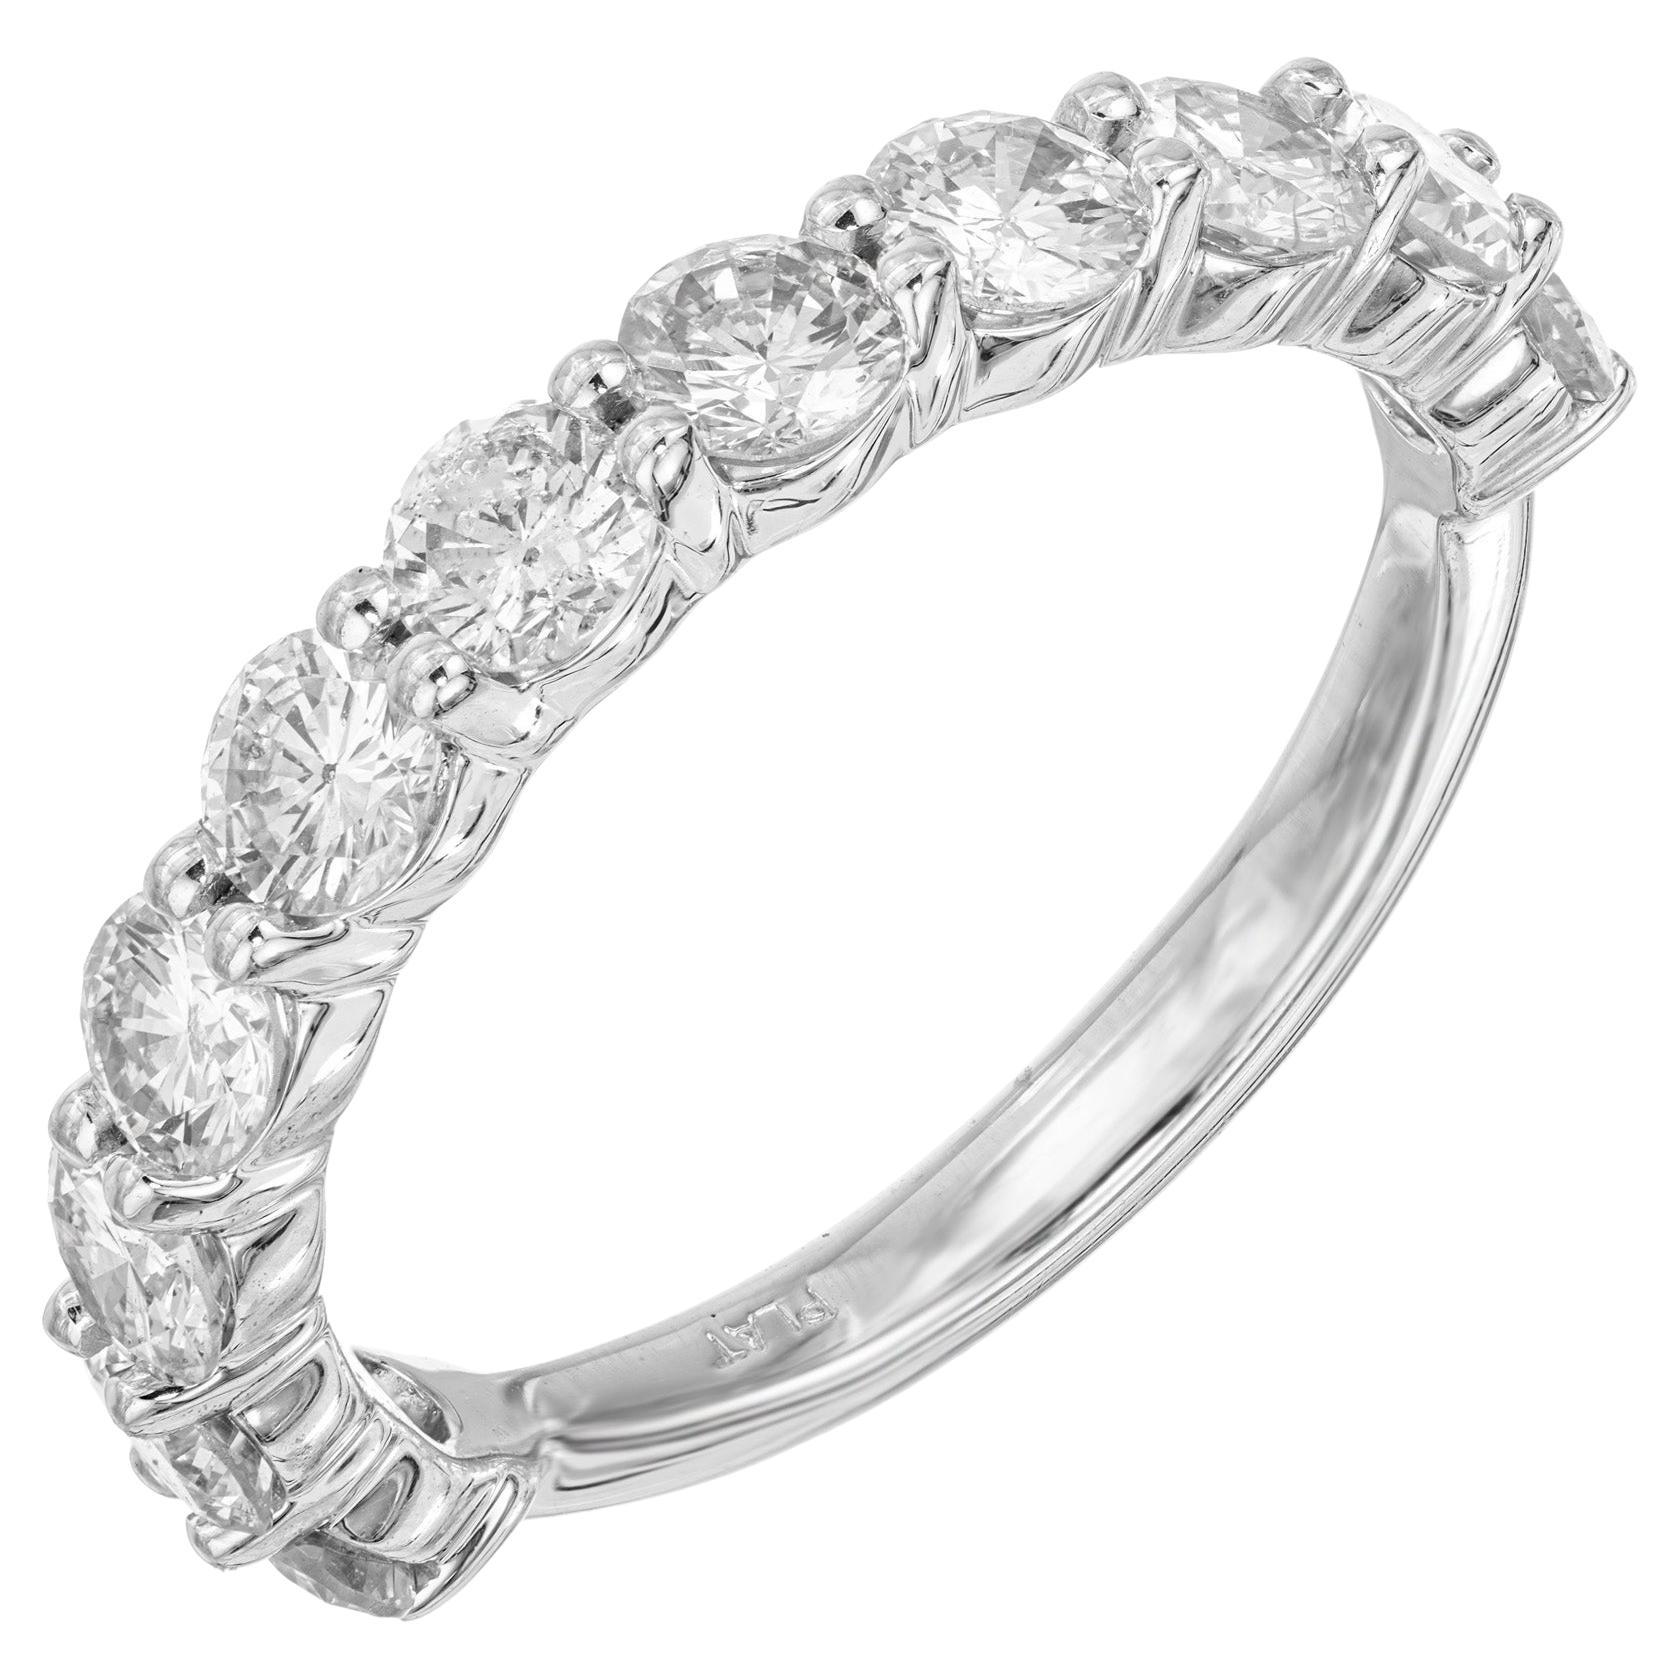 Peter Suchy 1.67 Carat Round Diamond Platinum Wedding Band Ring